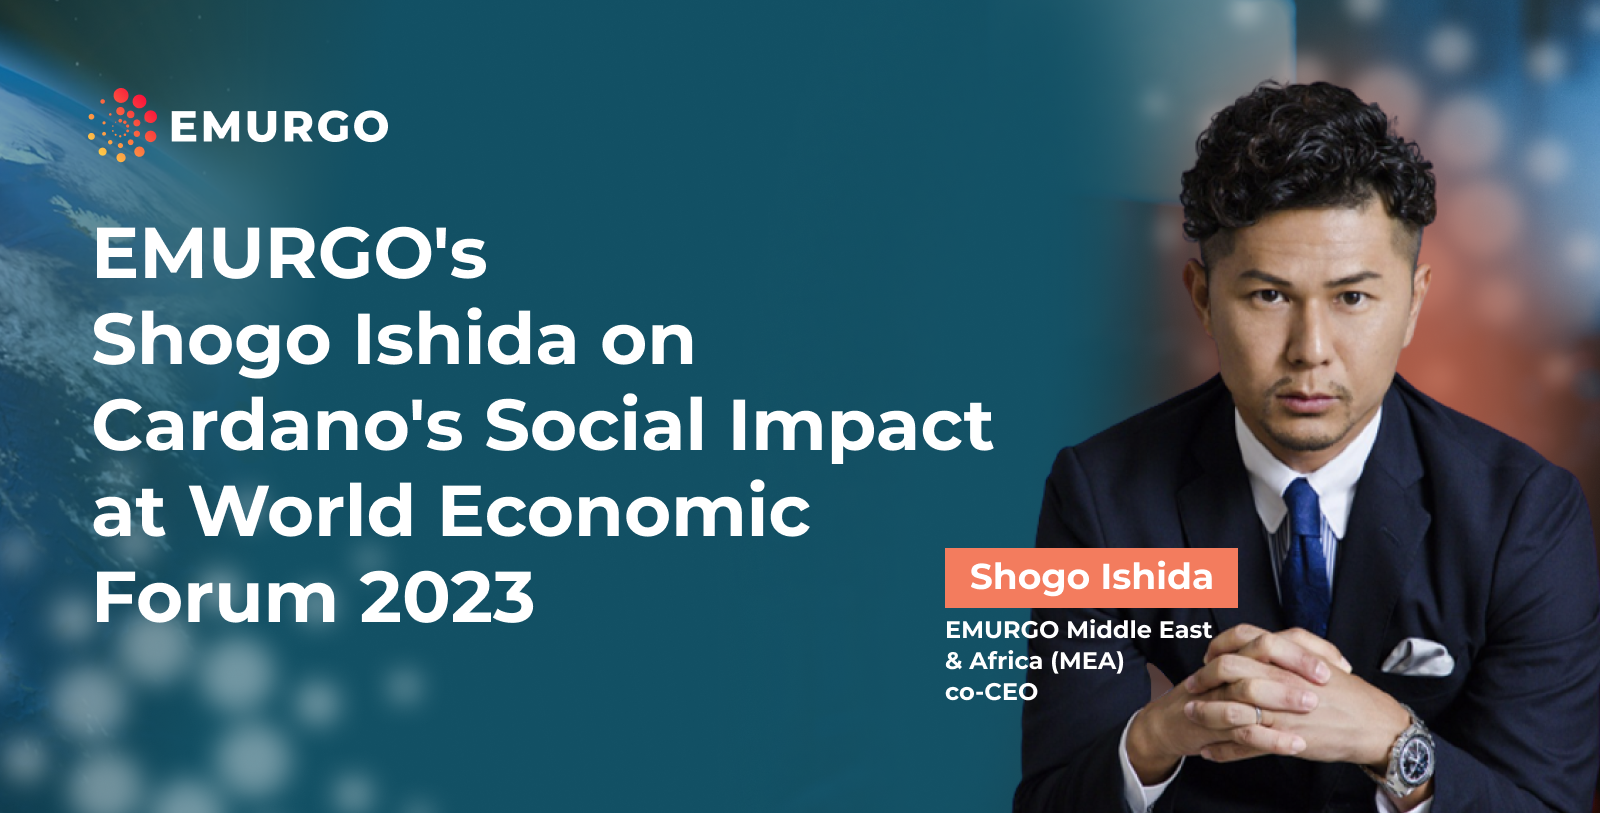 EMURGO’s Shogo Ishida Spoke About Cardano’s Social Impact at World Economic Forum 2023